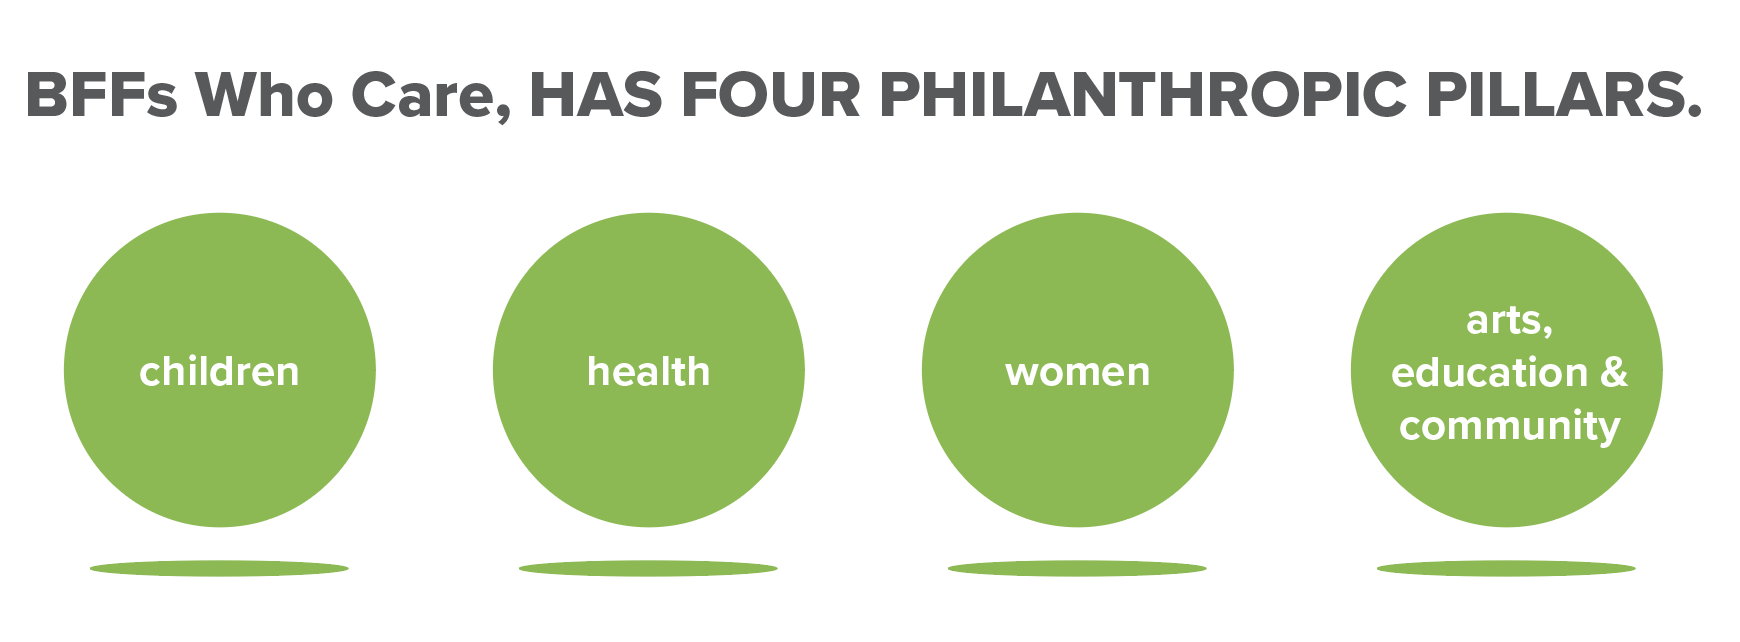 BFFs Who Care Four Philanthropic Pillars